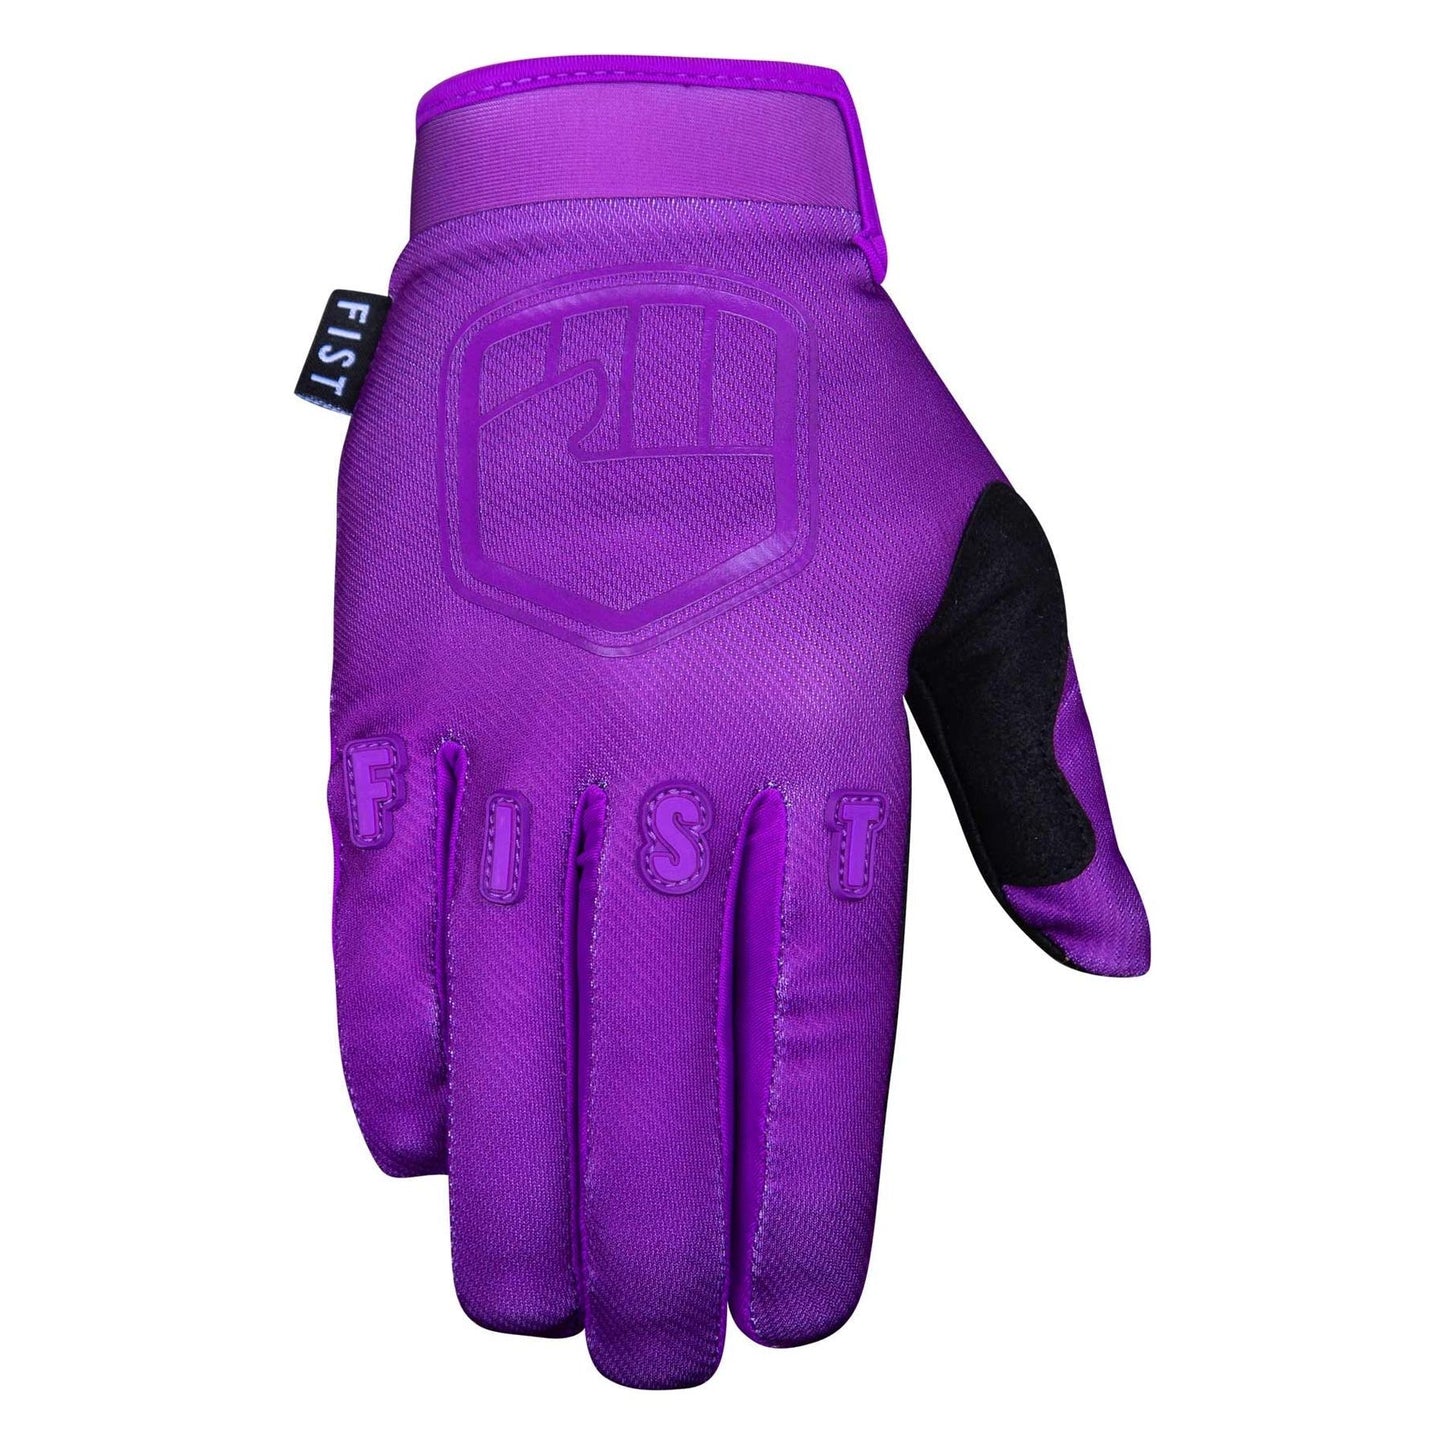 Fist Handwear Stocker Youth Strapped Glove - Youth S - Purple Stocker - Image 1